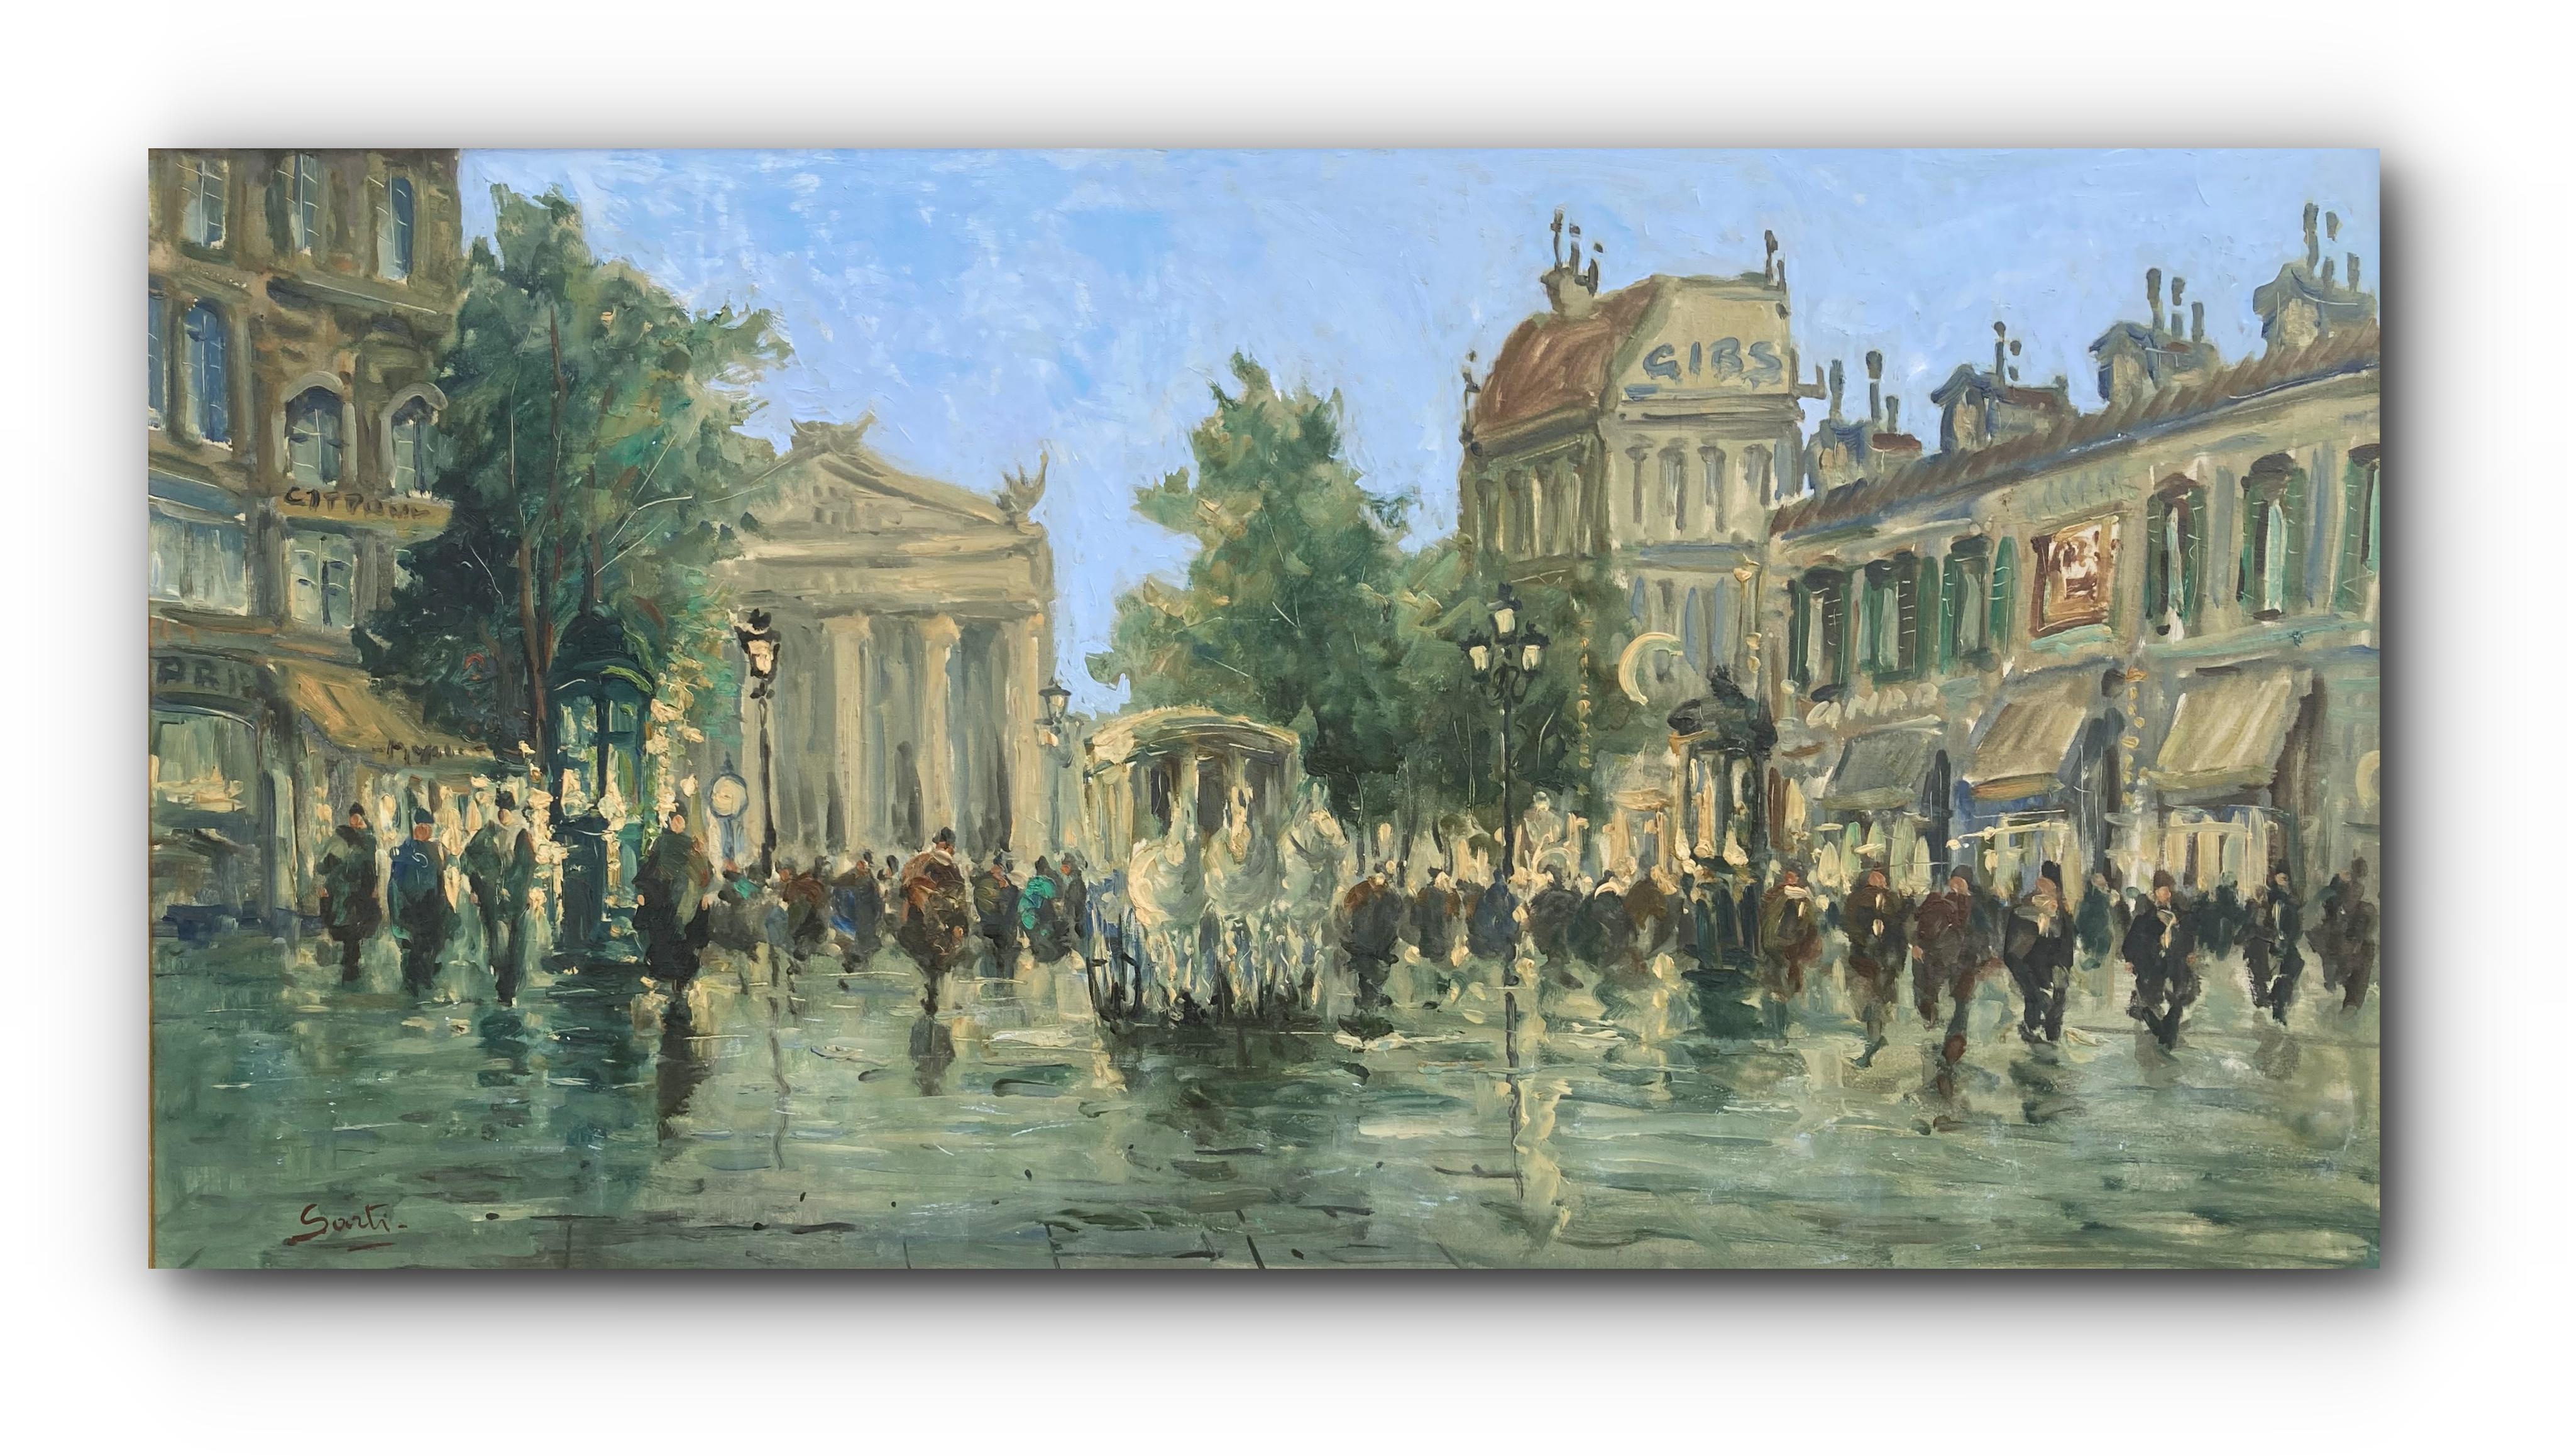 Nelusco Sarti Landscape Painting - After the Rain, Rome (Mid-Century Impressionist Europe City Painting)